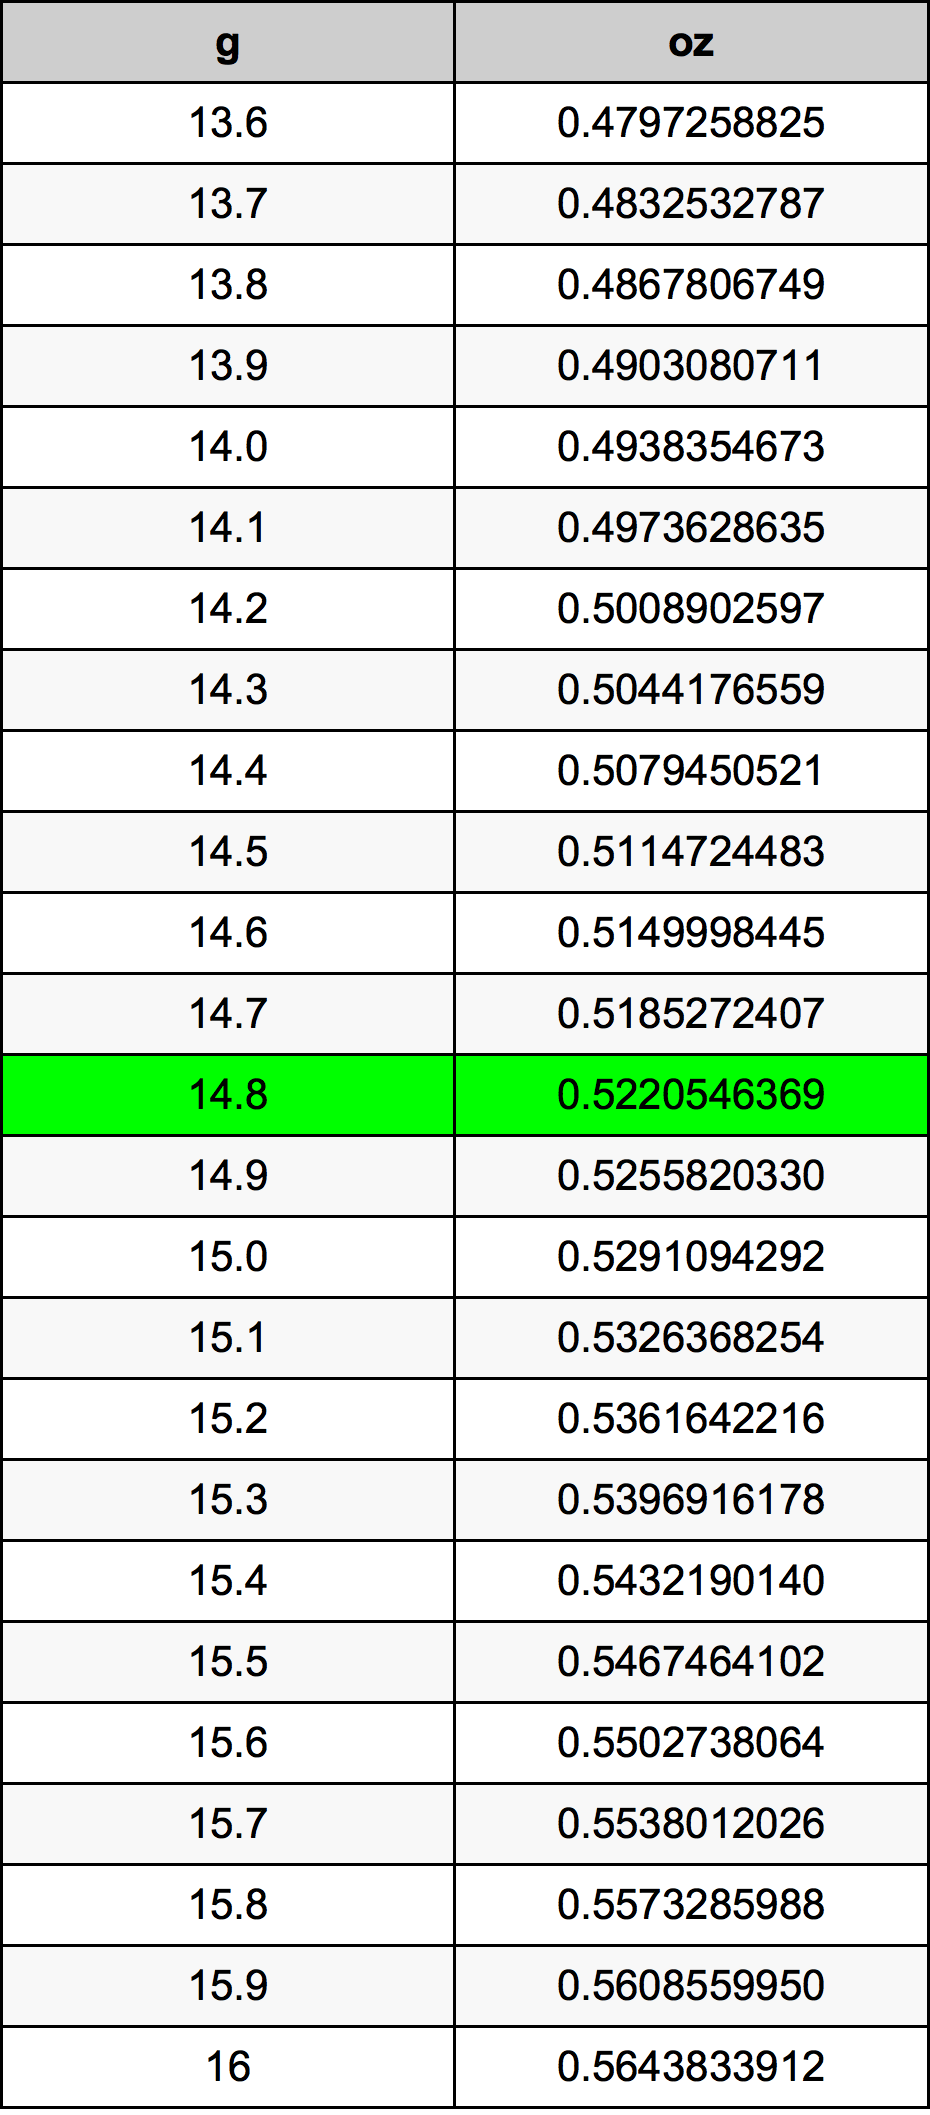 14.8 غرام جدول تحويل